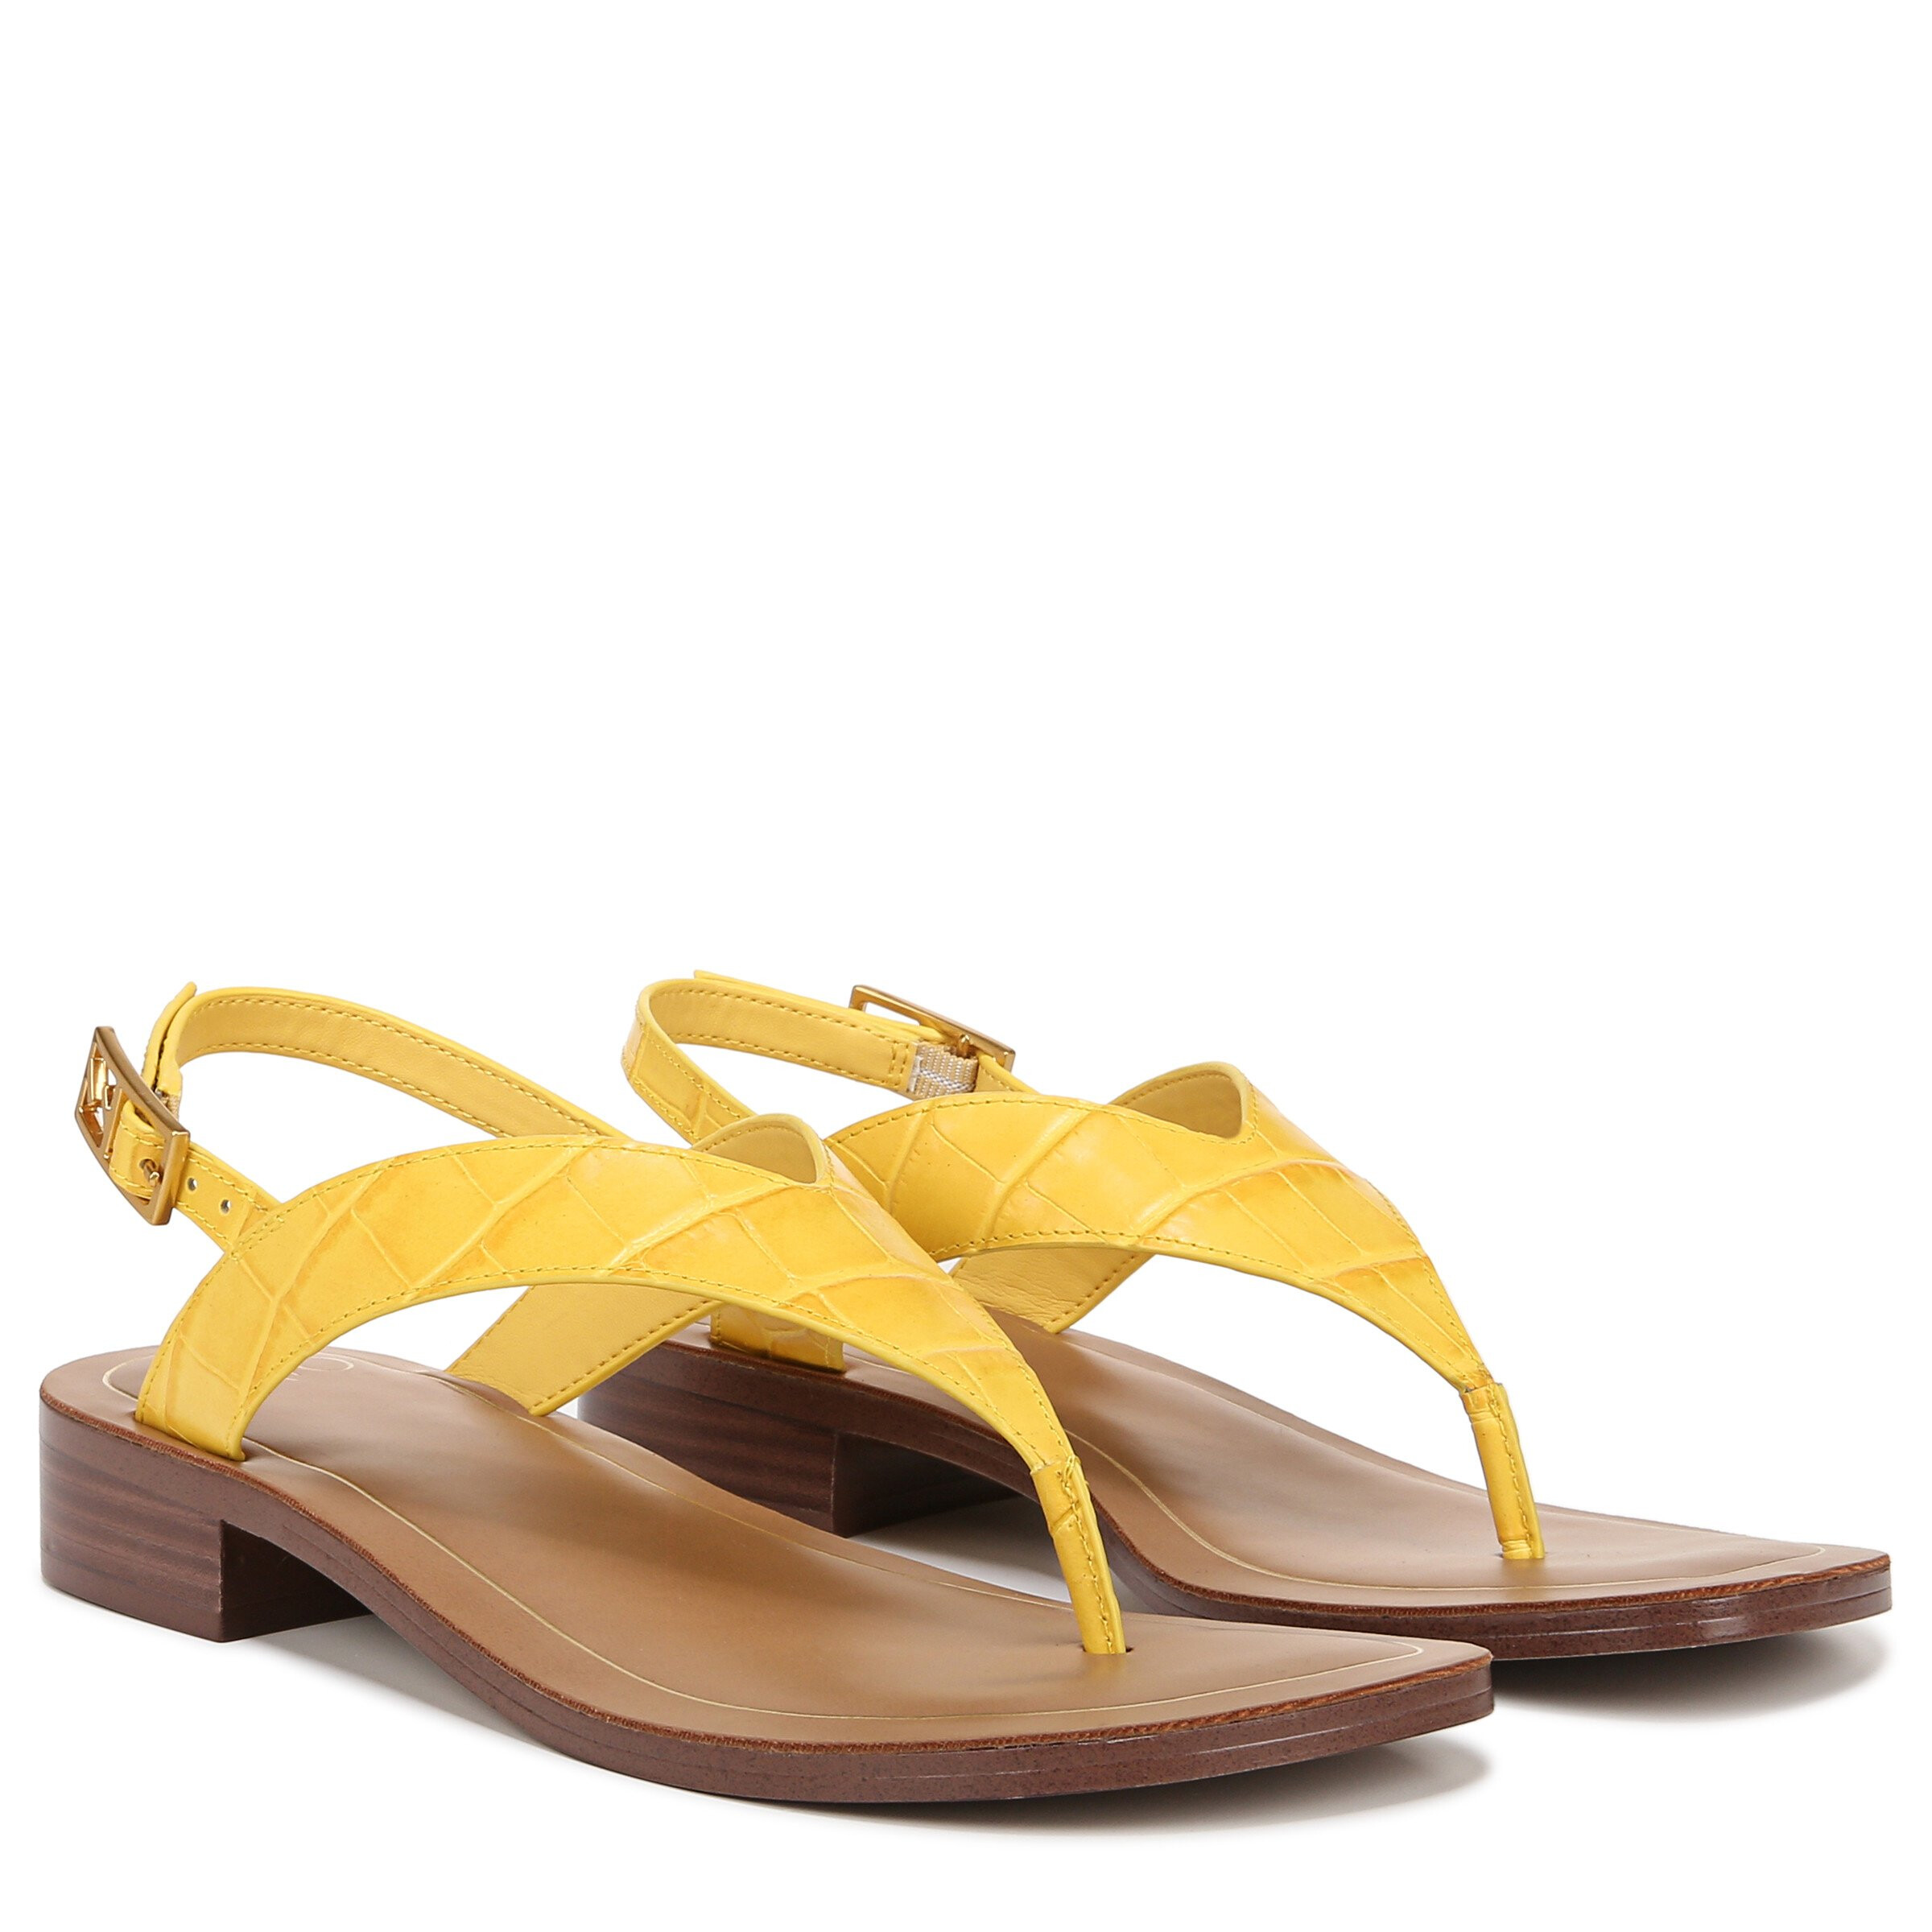 Incaltaminte Femei Franco Sarto Iris Ankle Strap Thong Sandals Yellow Croc Print Leather